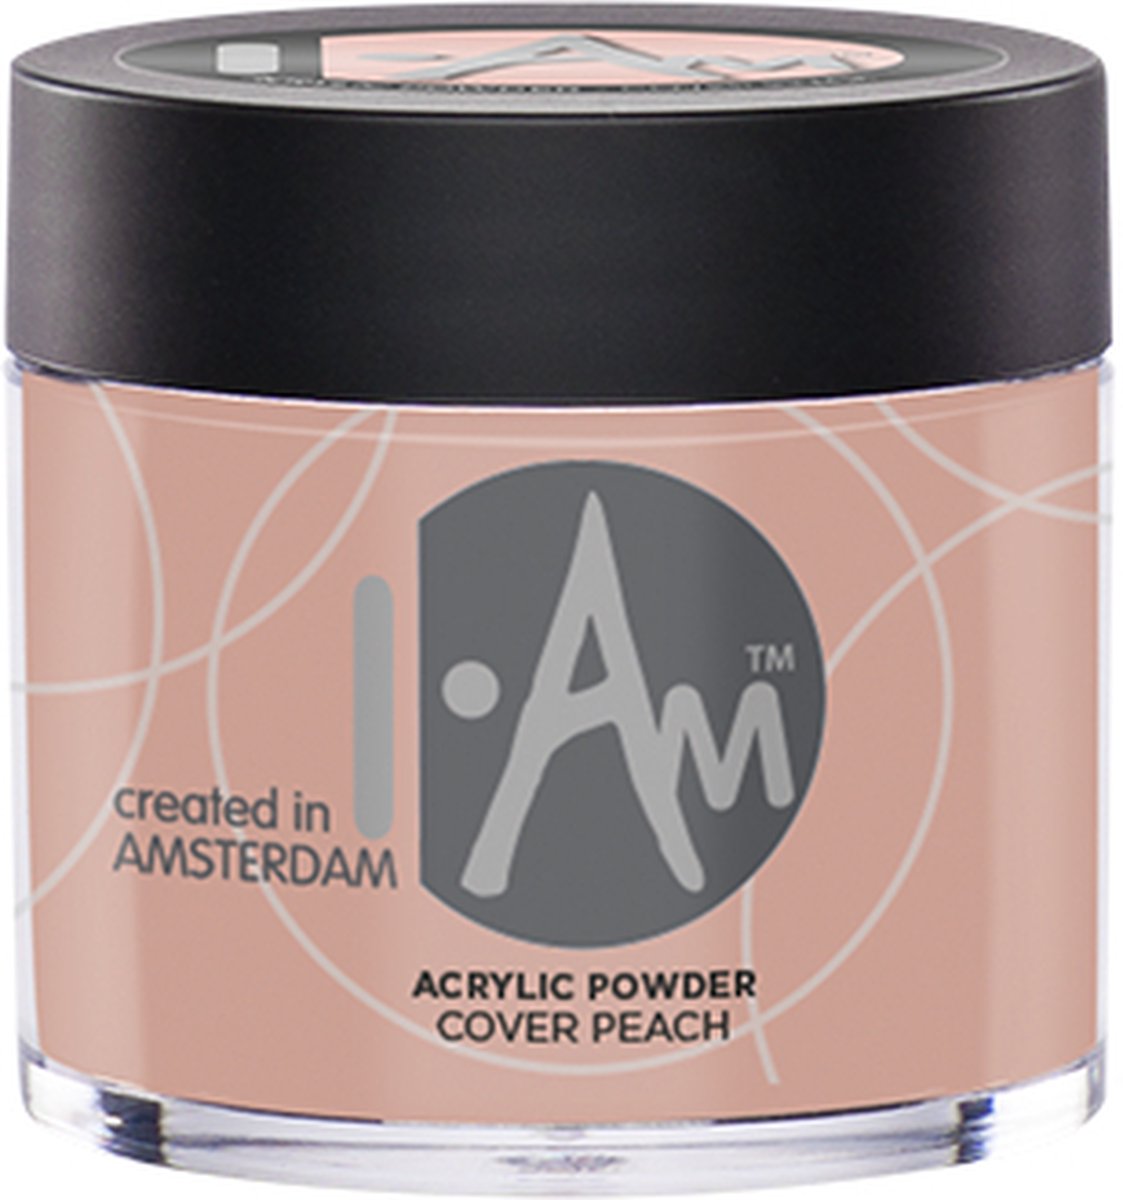 I.Am Nail Systems I.Am Acrylic Powder Cover Peach (25g)